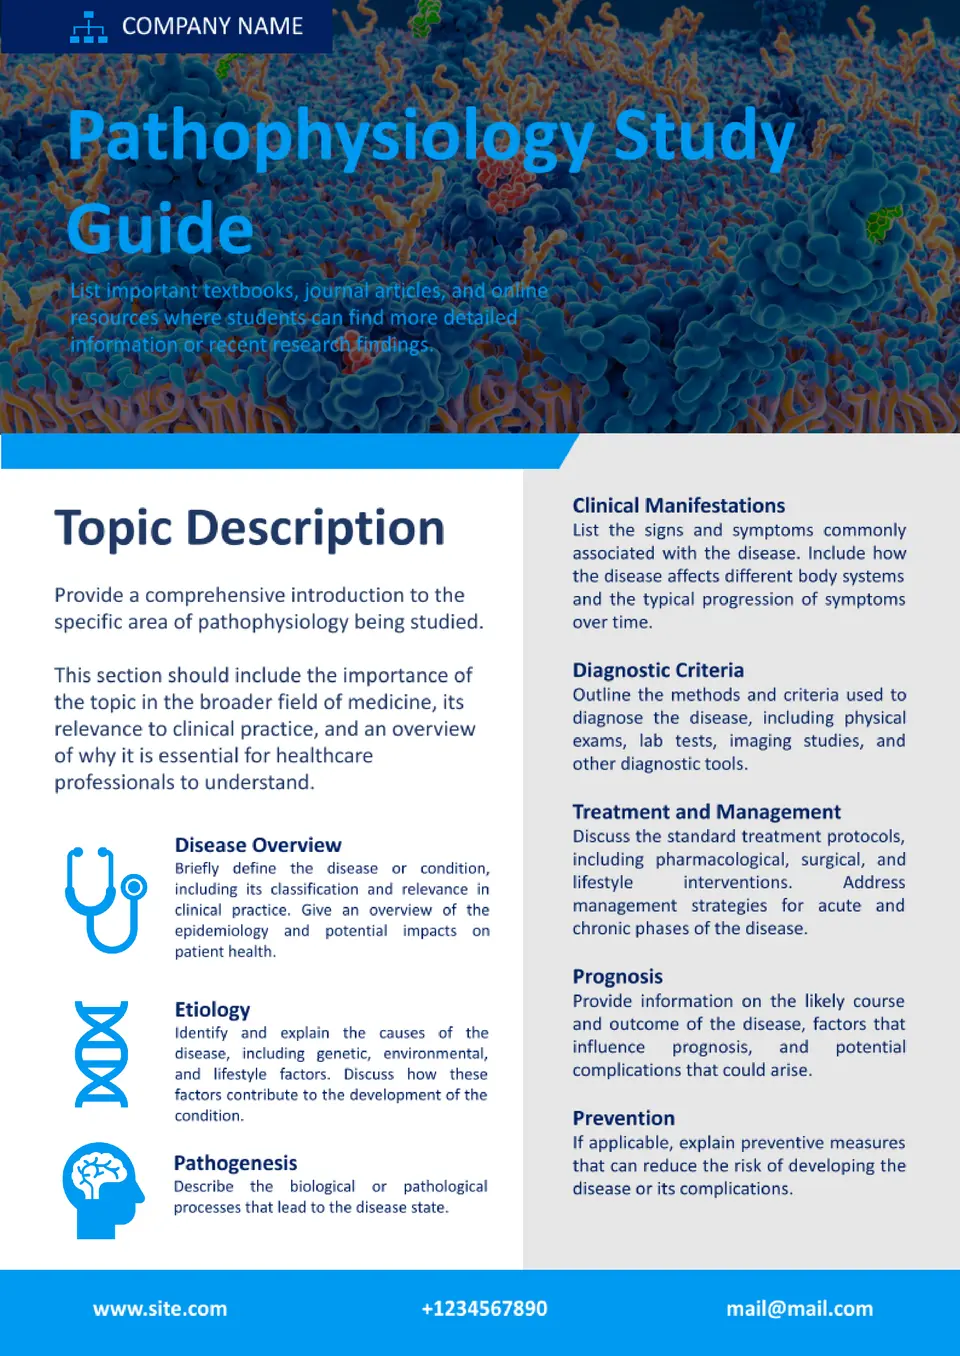 Pathophysiology Study Guide Template